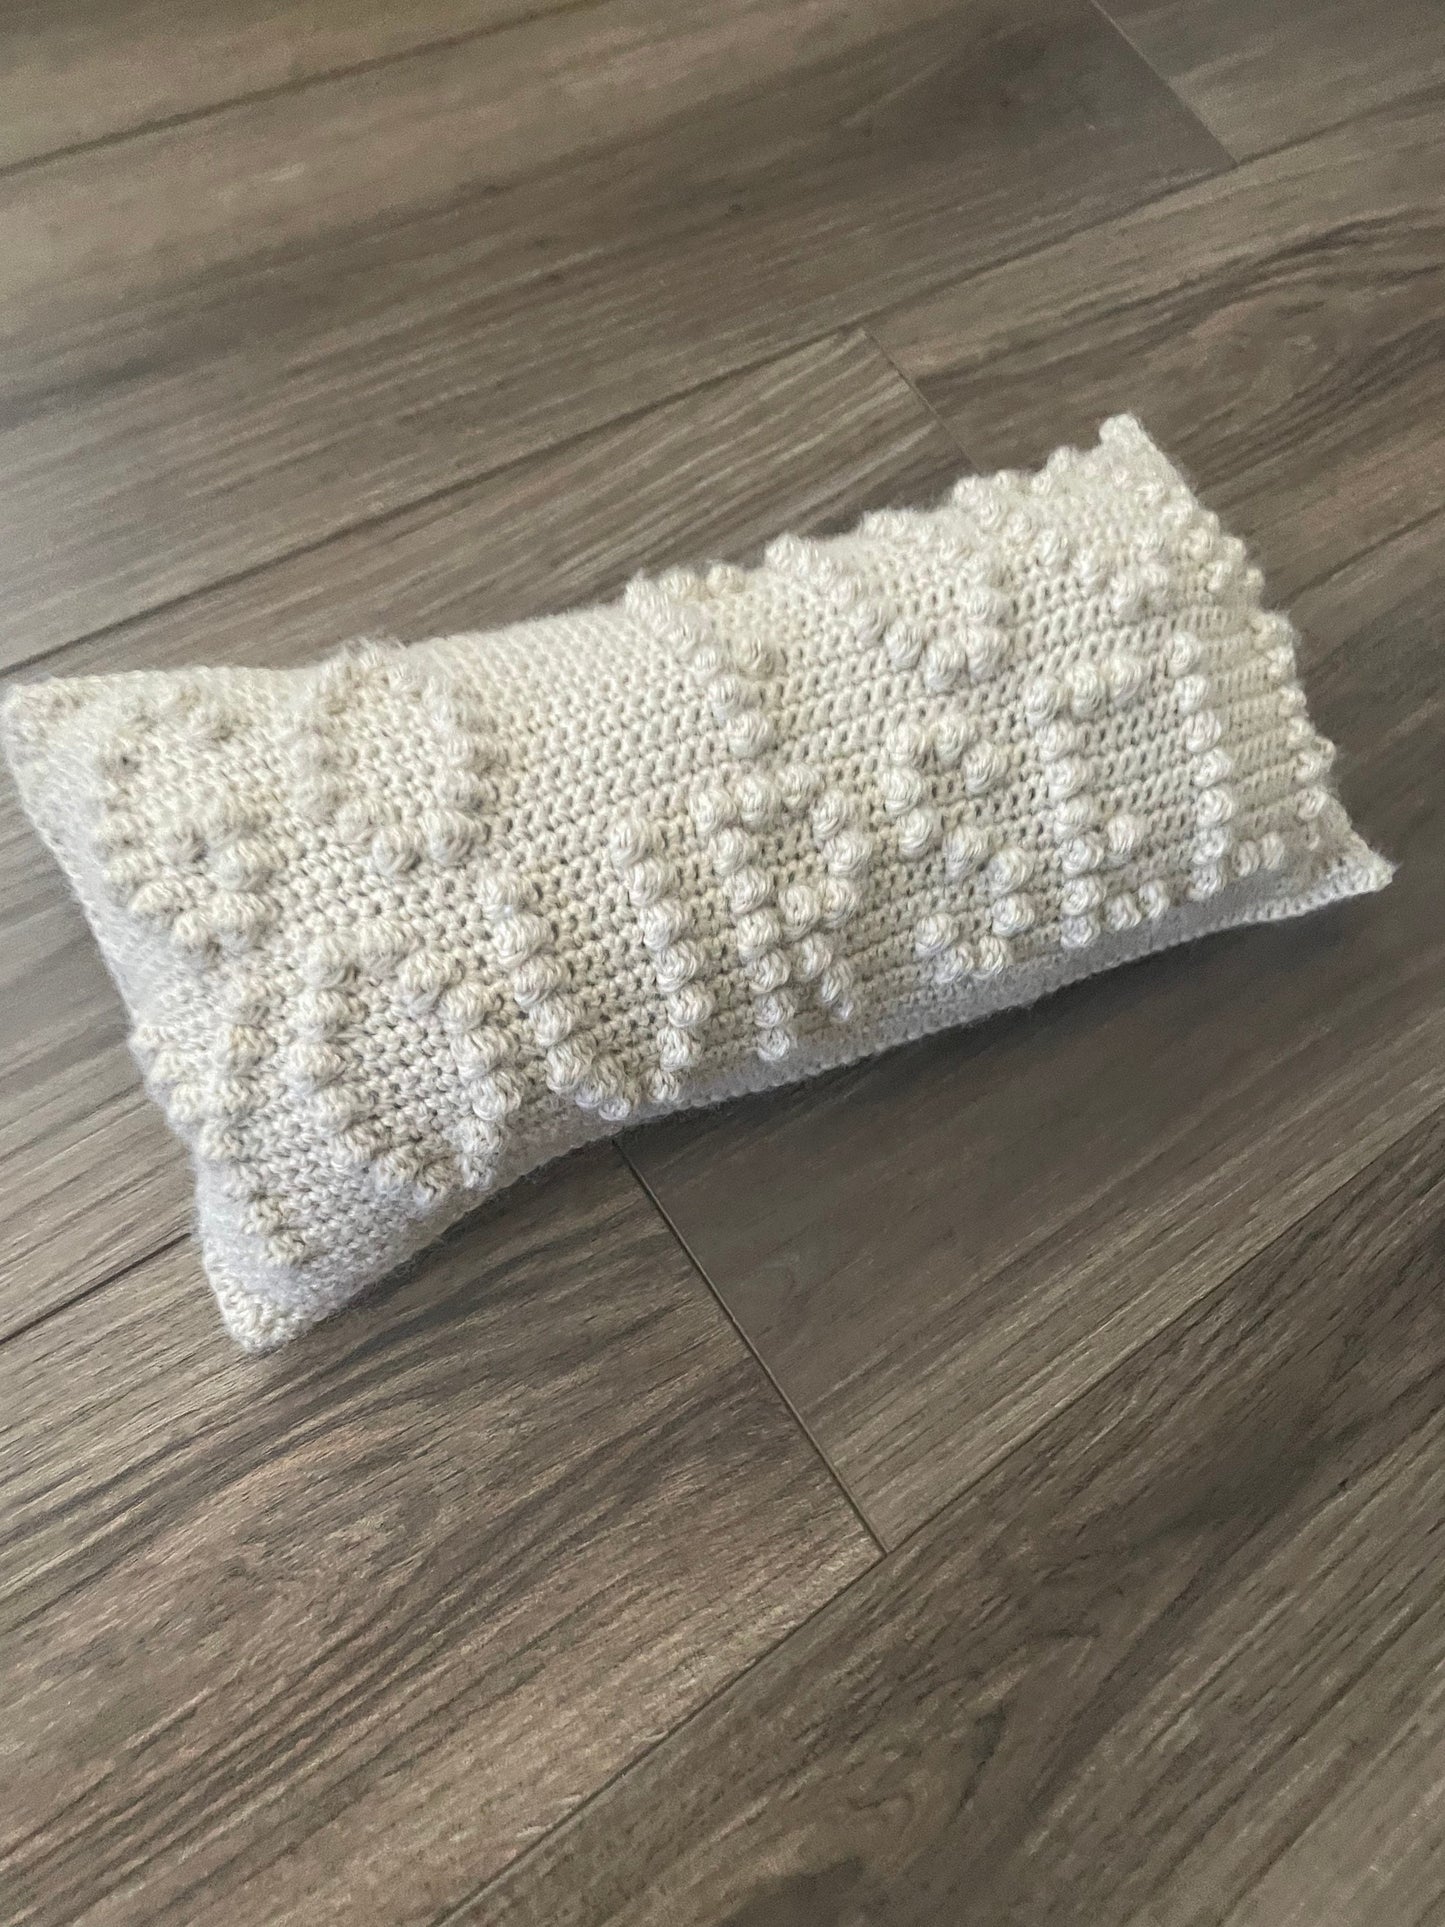 CROCHET PATTERN- Go Fuck Yourself Pillow, GFY Crochet Pillow, Digital pdf